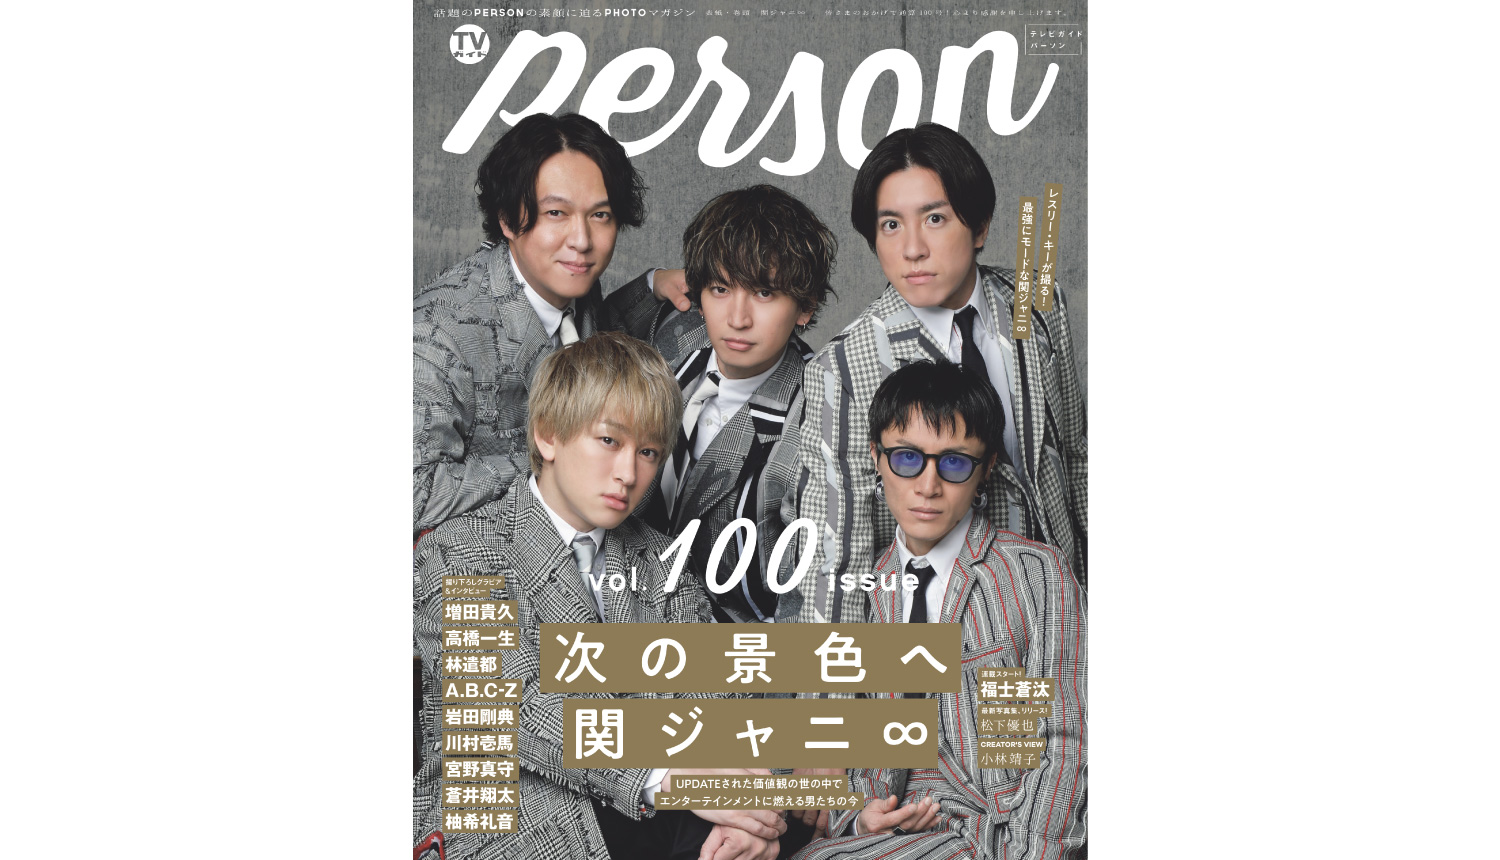 TVガイドPERSON-TV-Guide-Person-雑誌